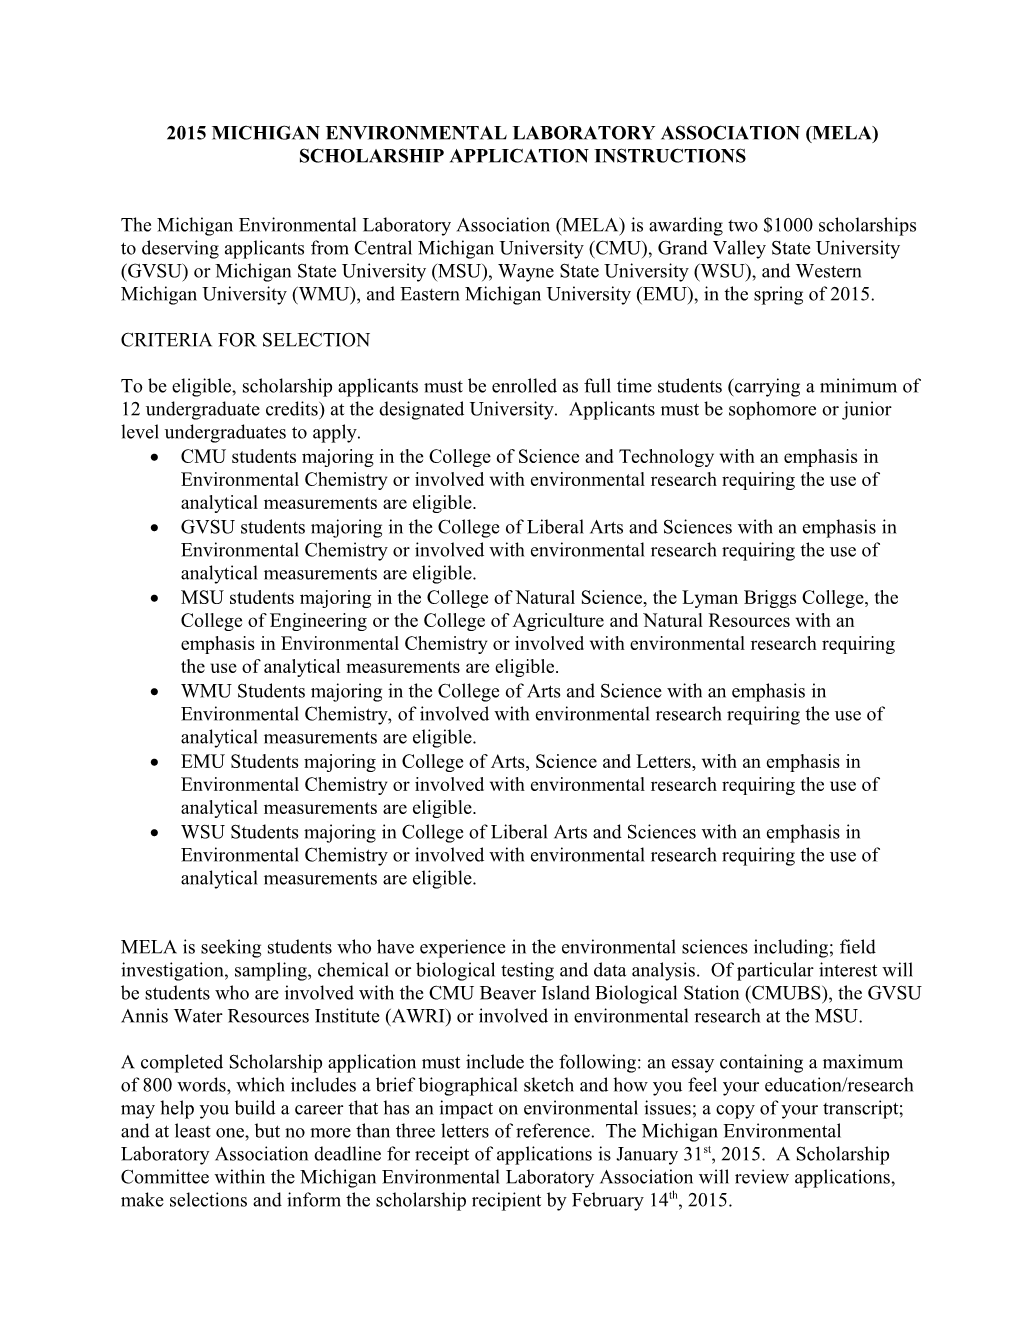 2000-2010 Michigan Environmental Laboratory Association (Mela) Scholarship Application